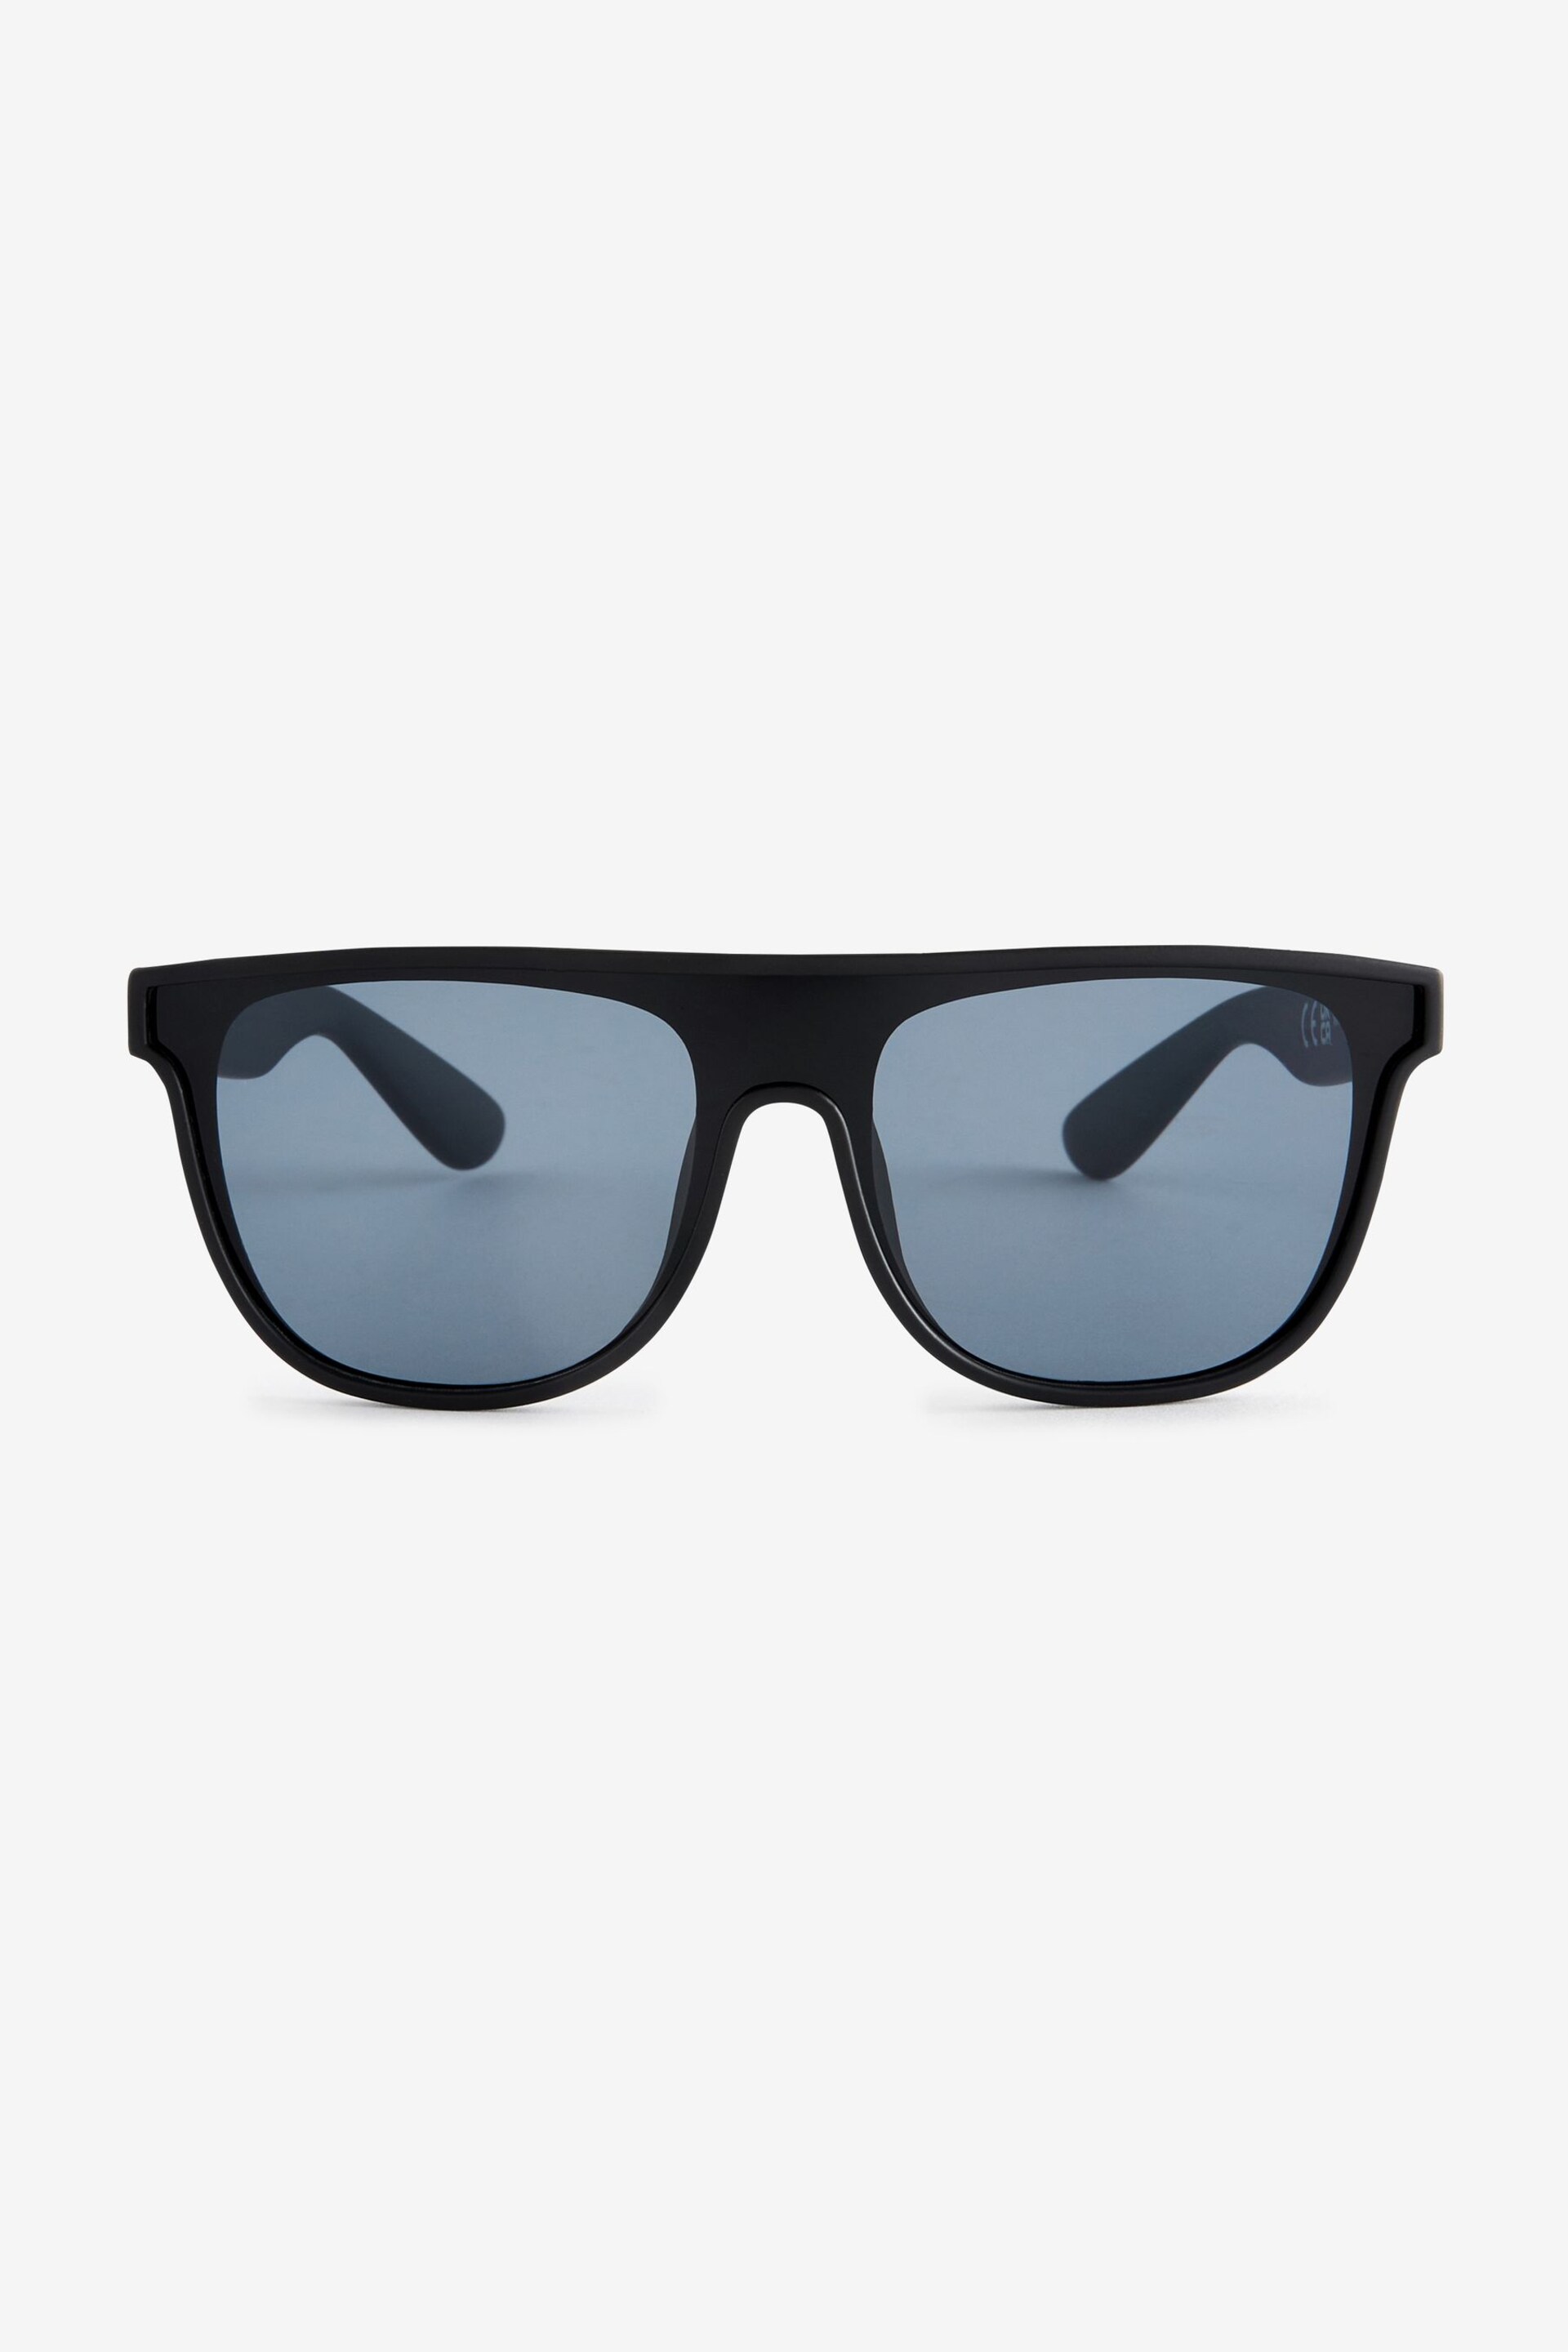 Black Visor Style Sunglasses - Image 2 of 3